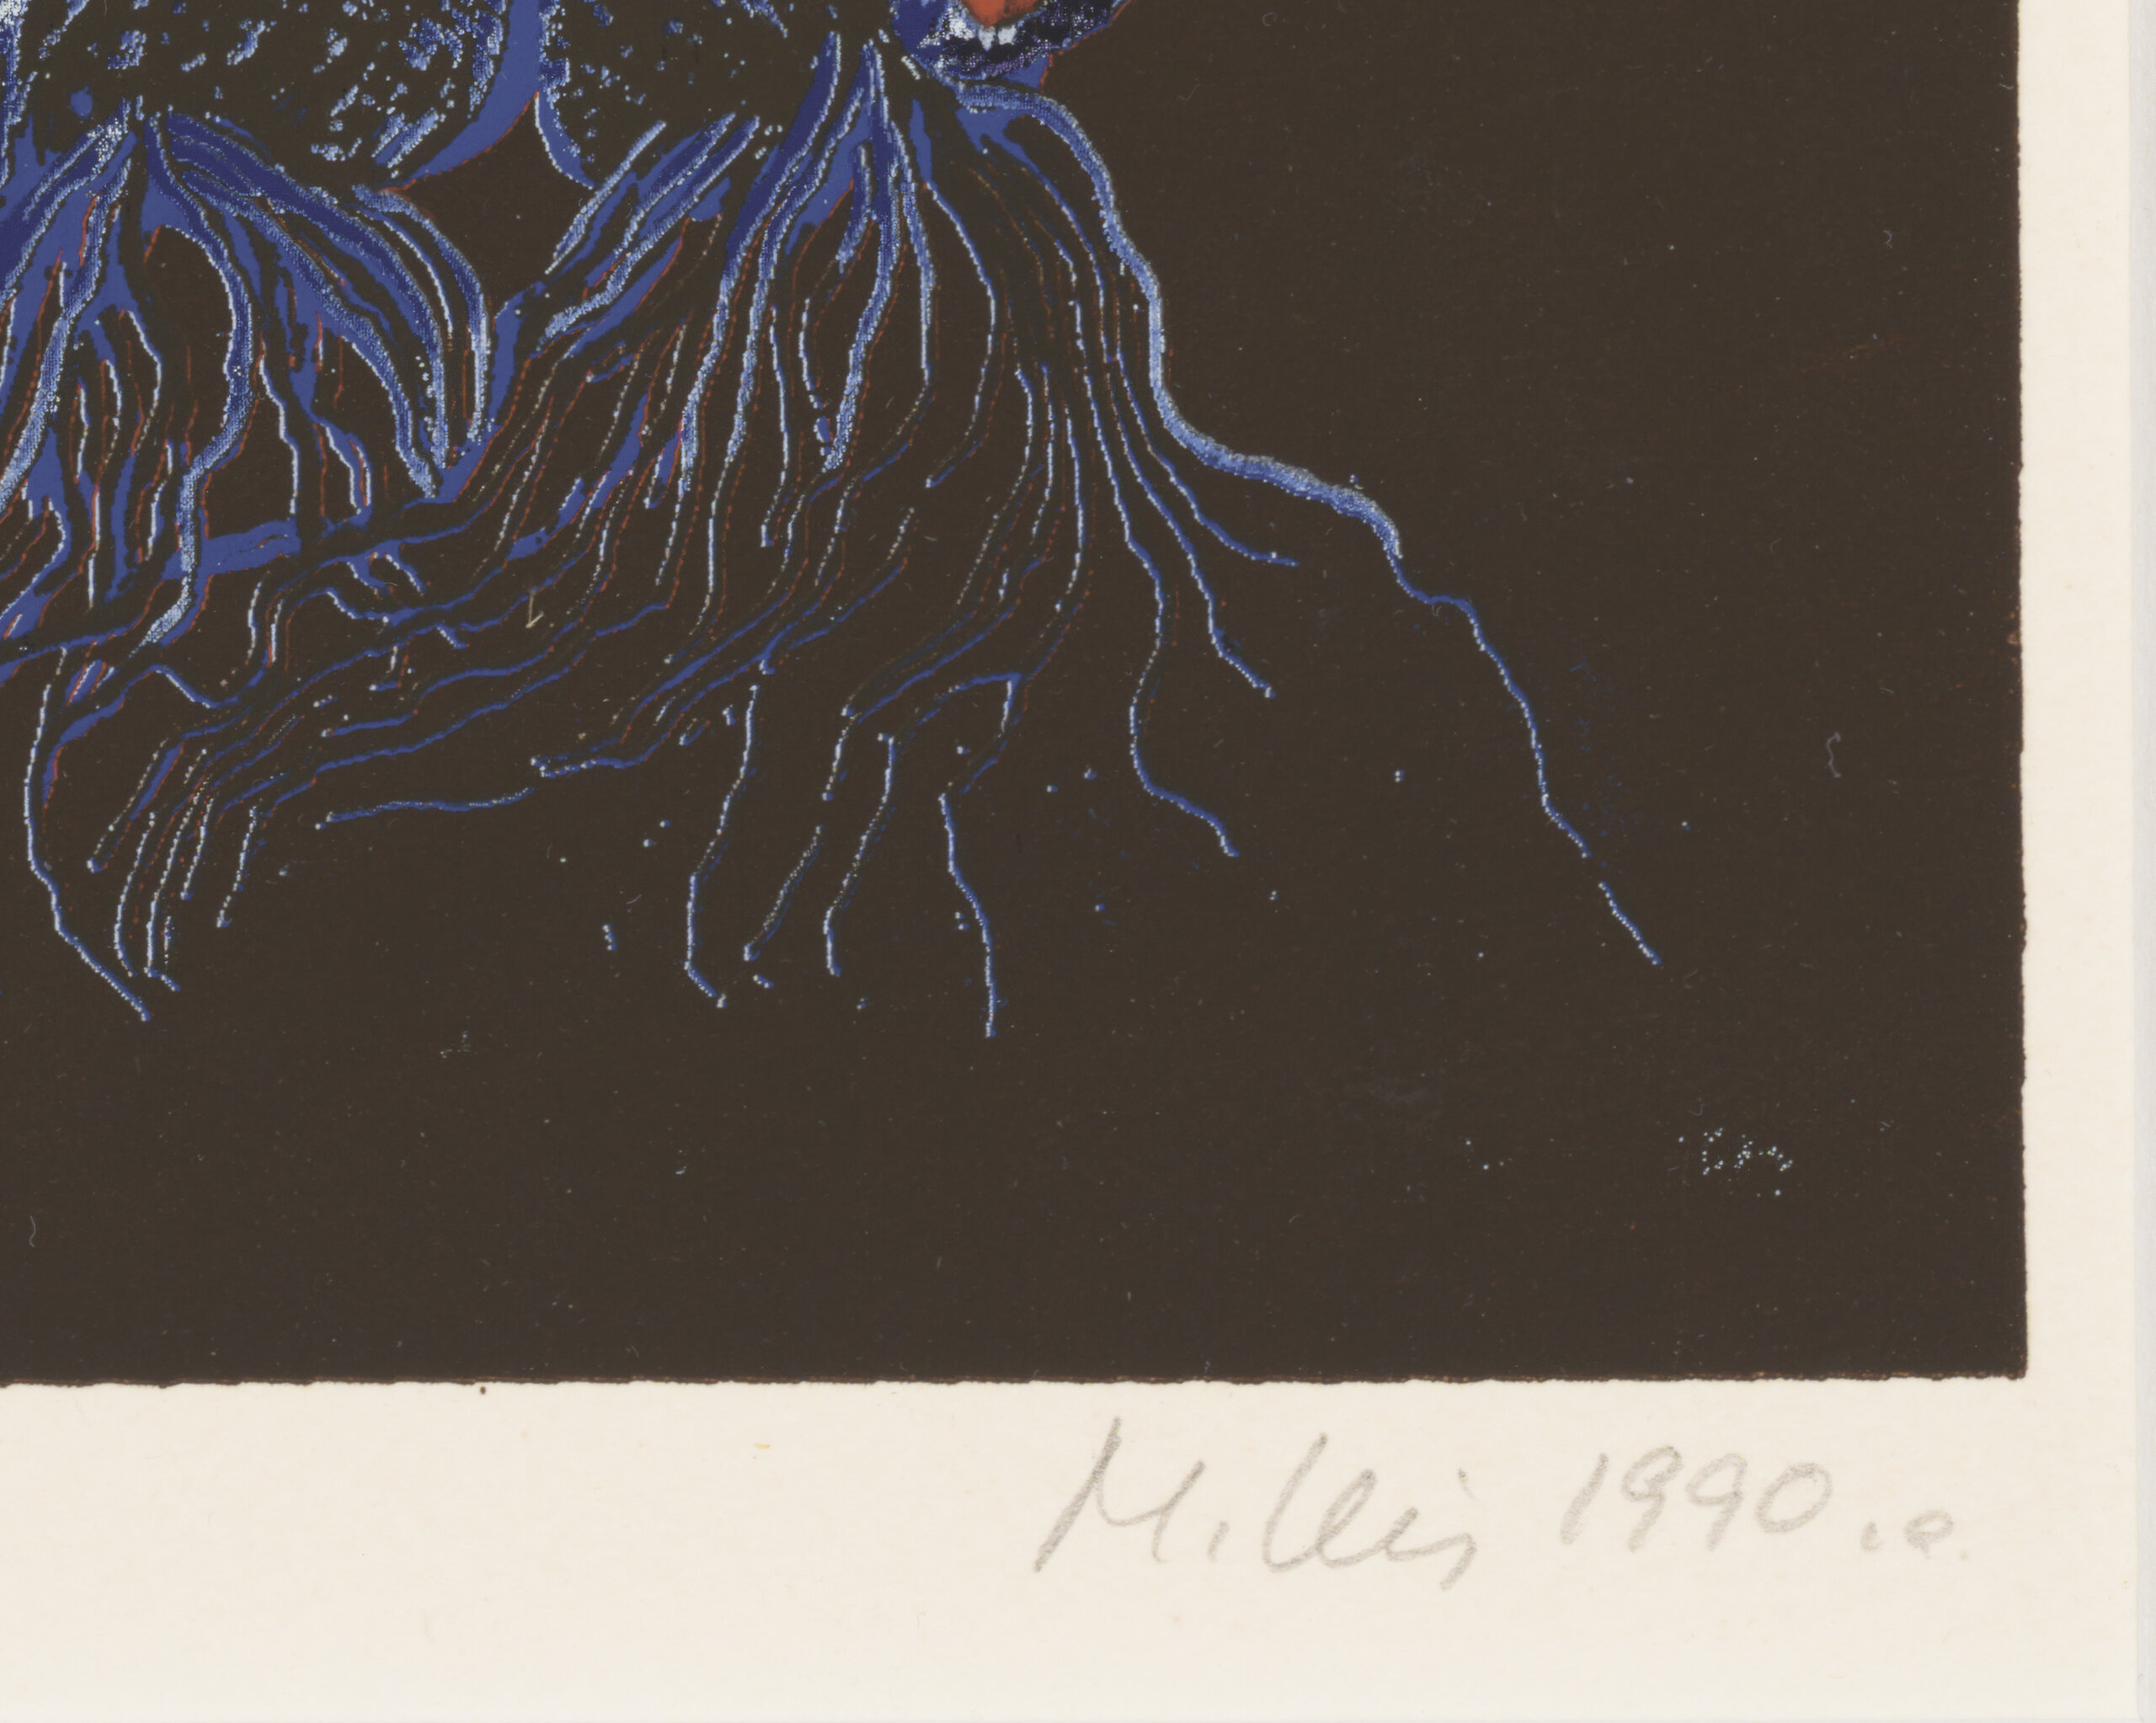 Malle Leis “Videvik”, 1990. Plm 35 x 22 cm.